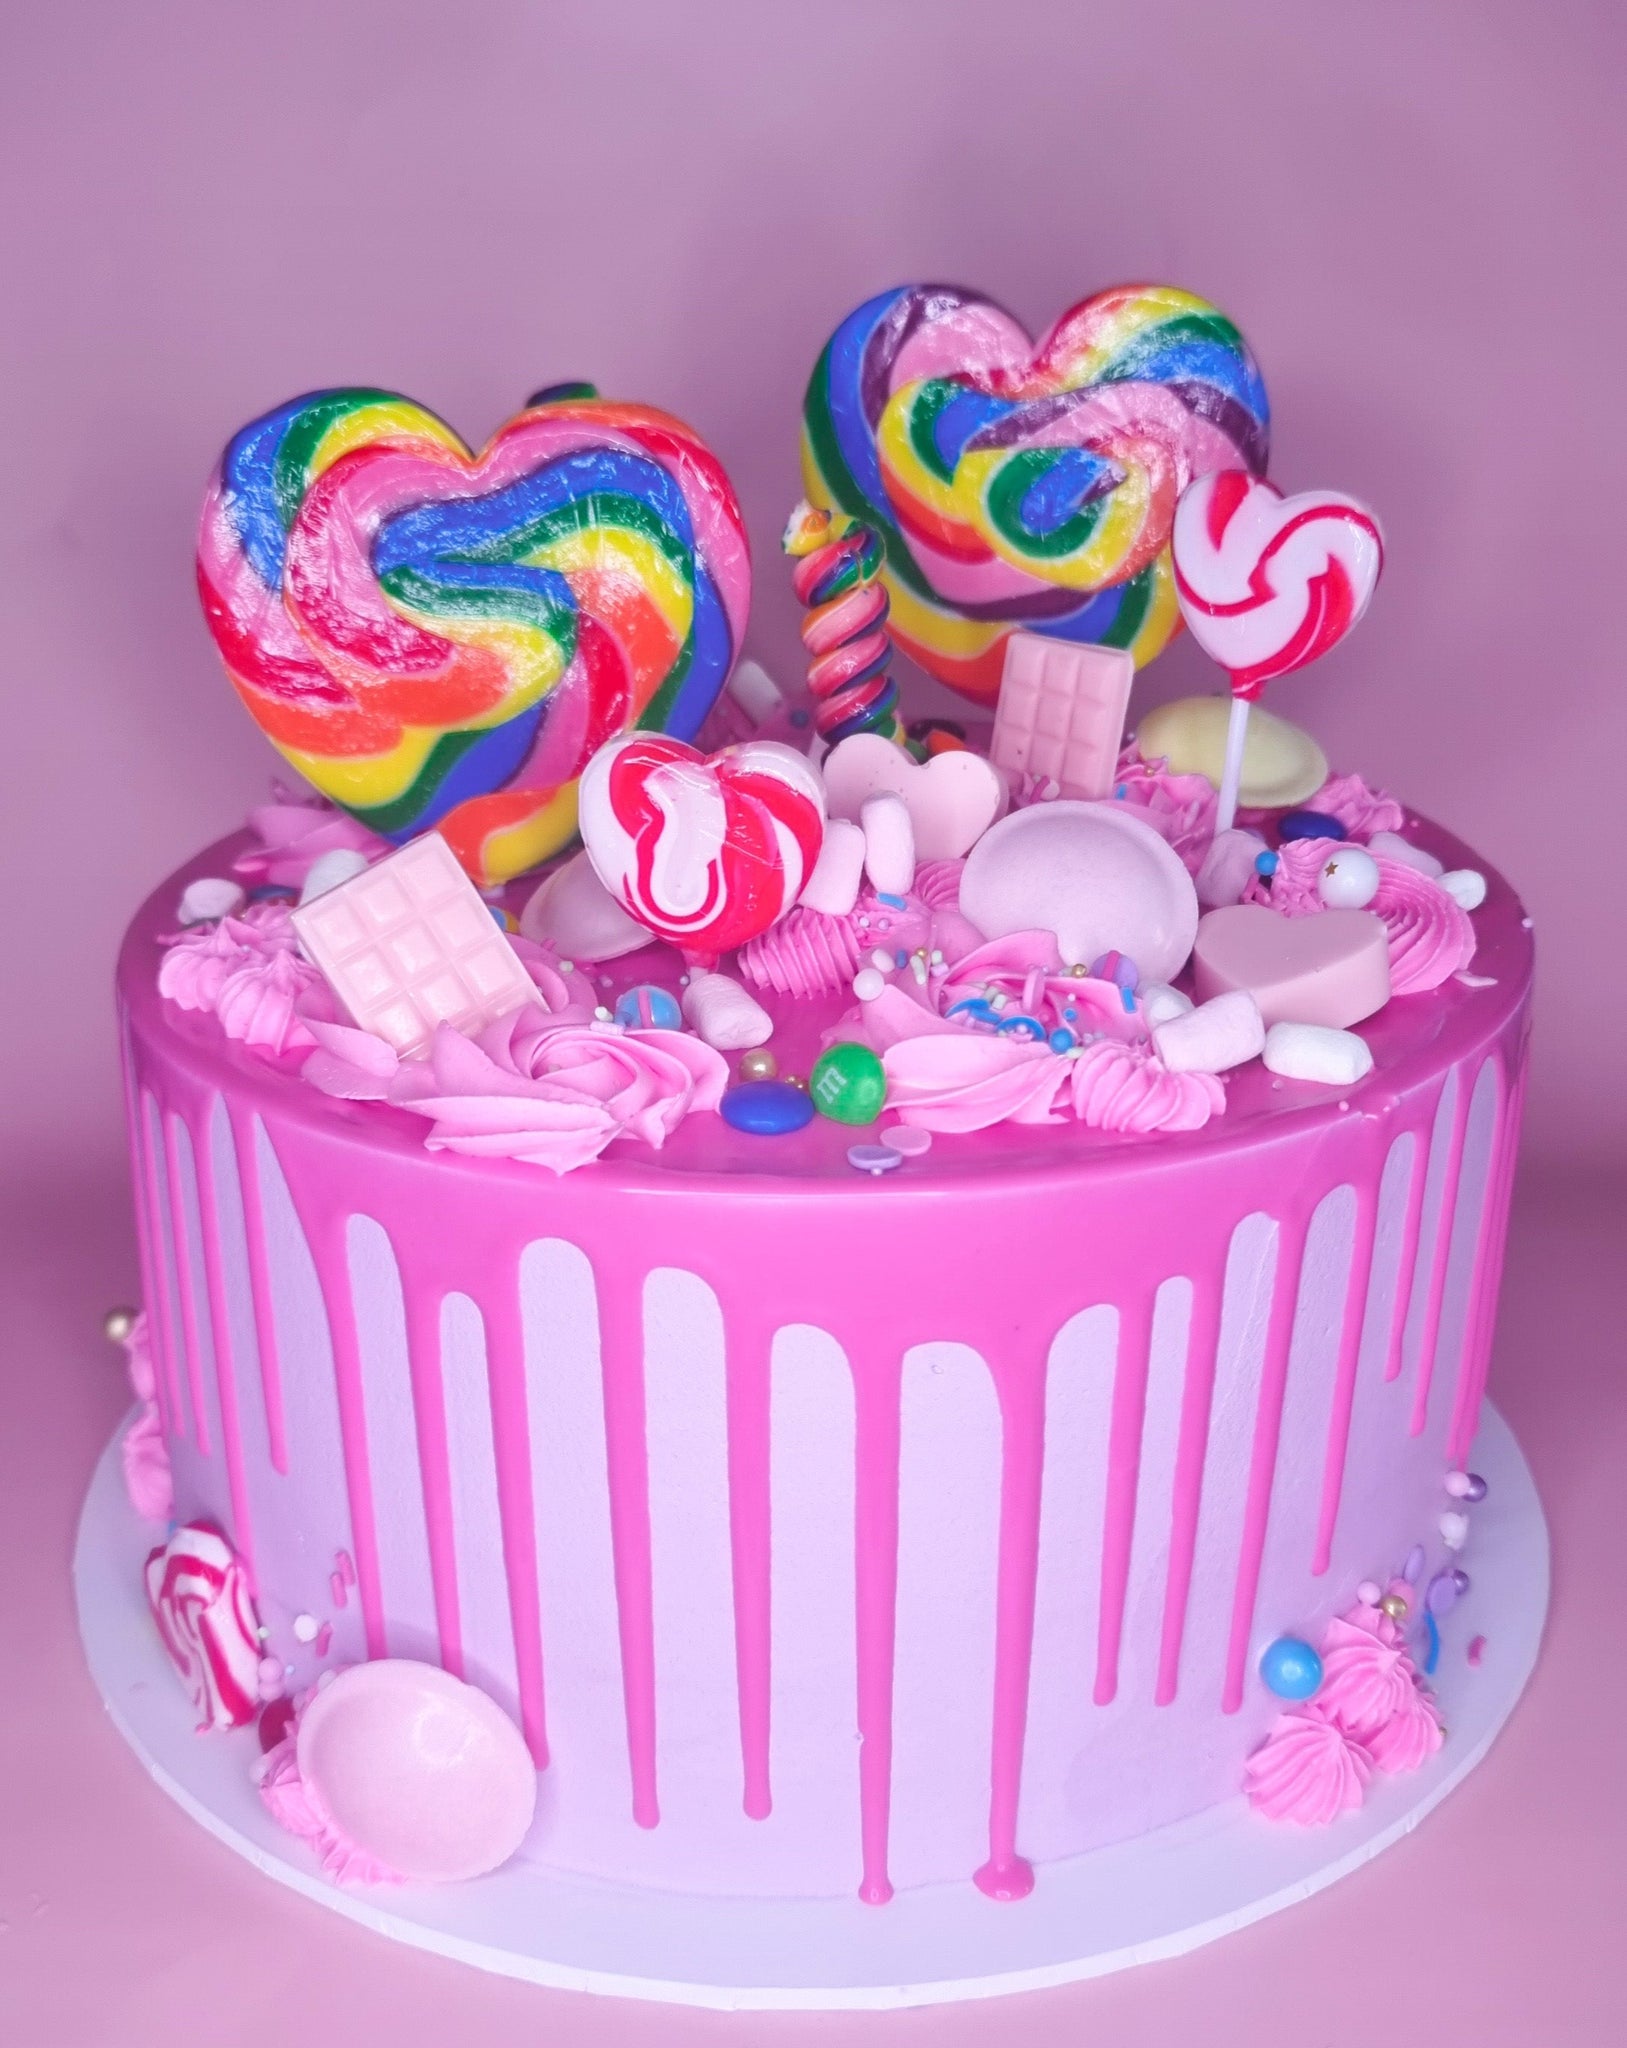 Candy Lane Drip Cake – The Cupcake Factory